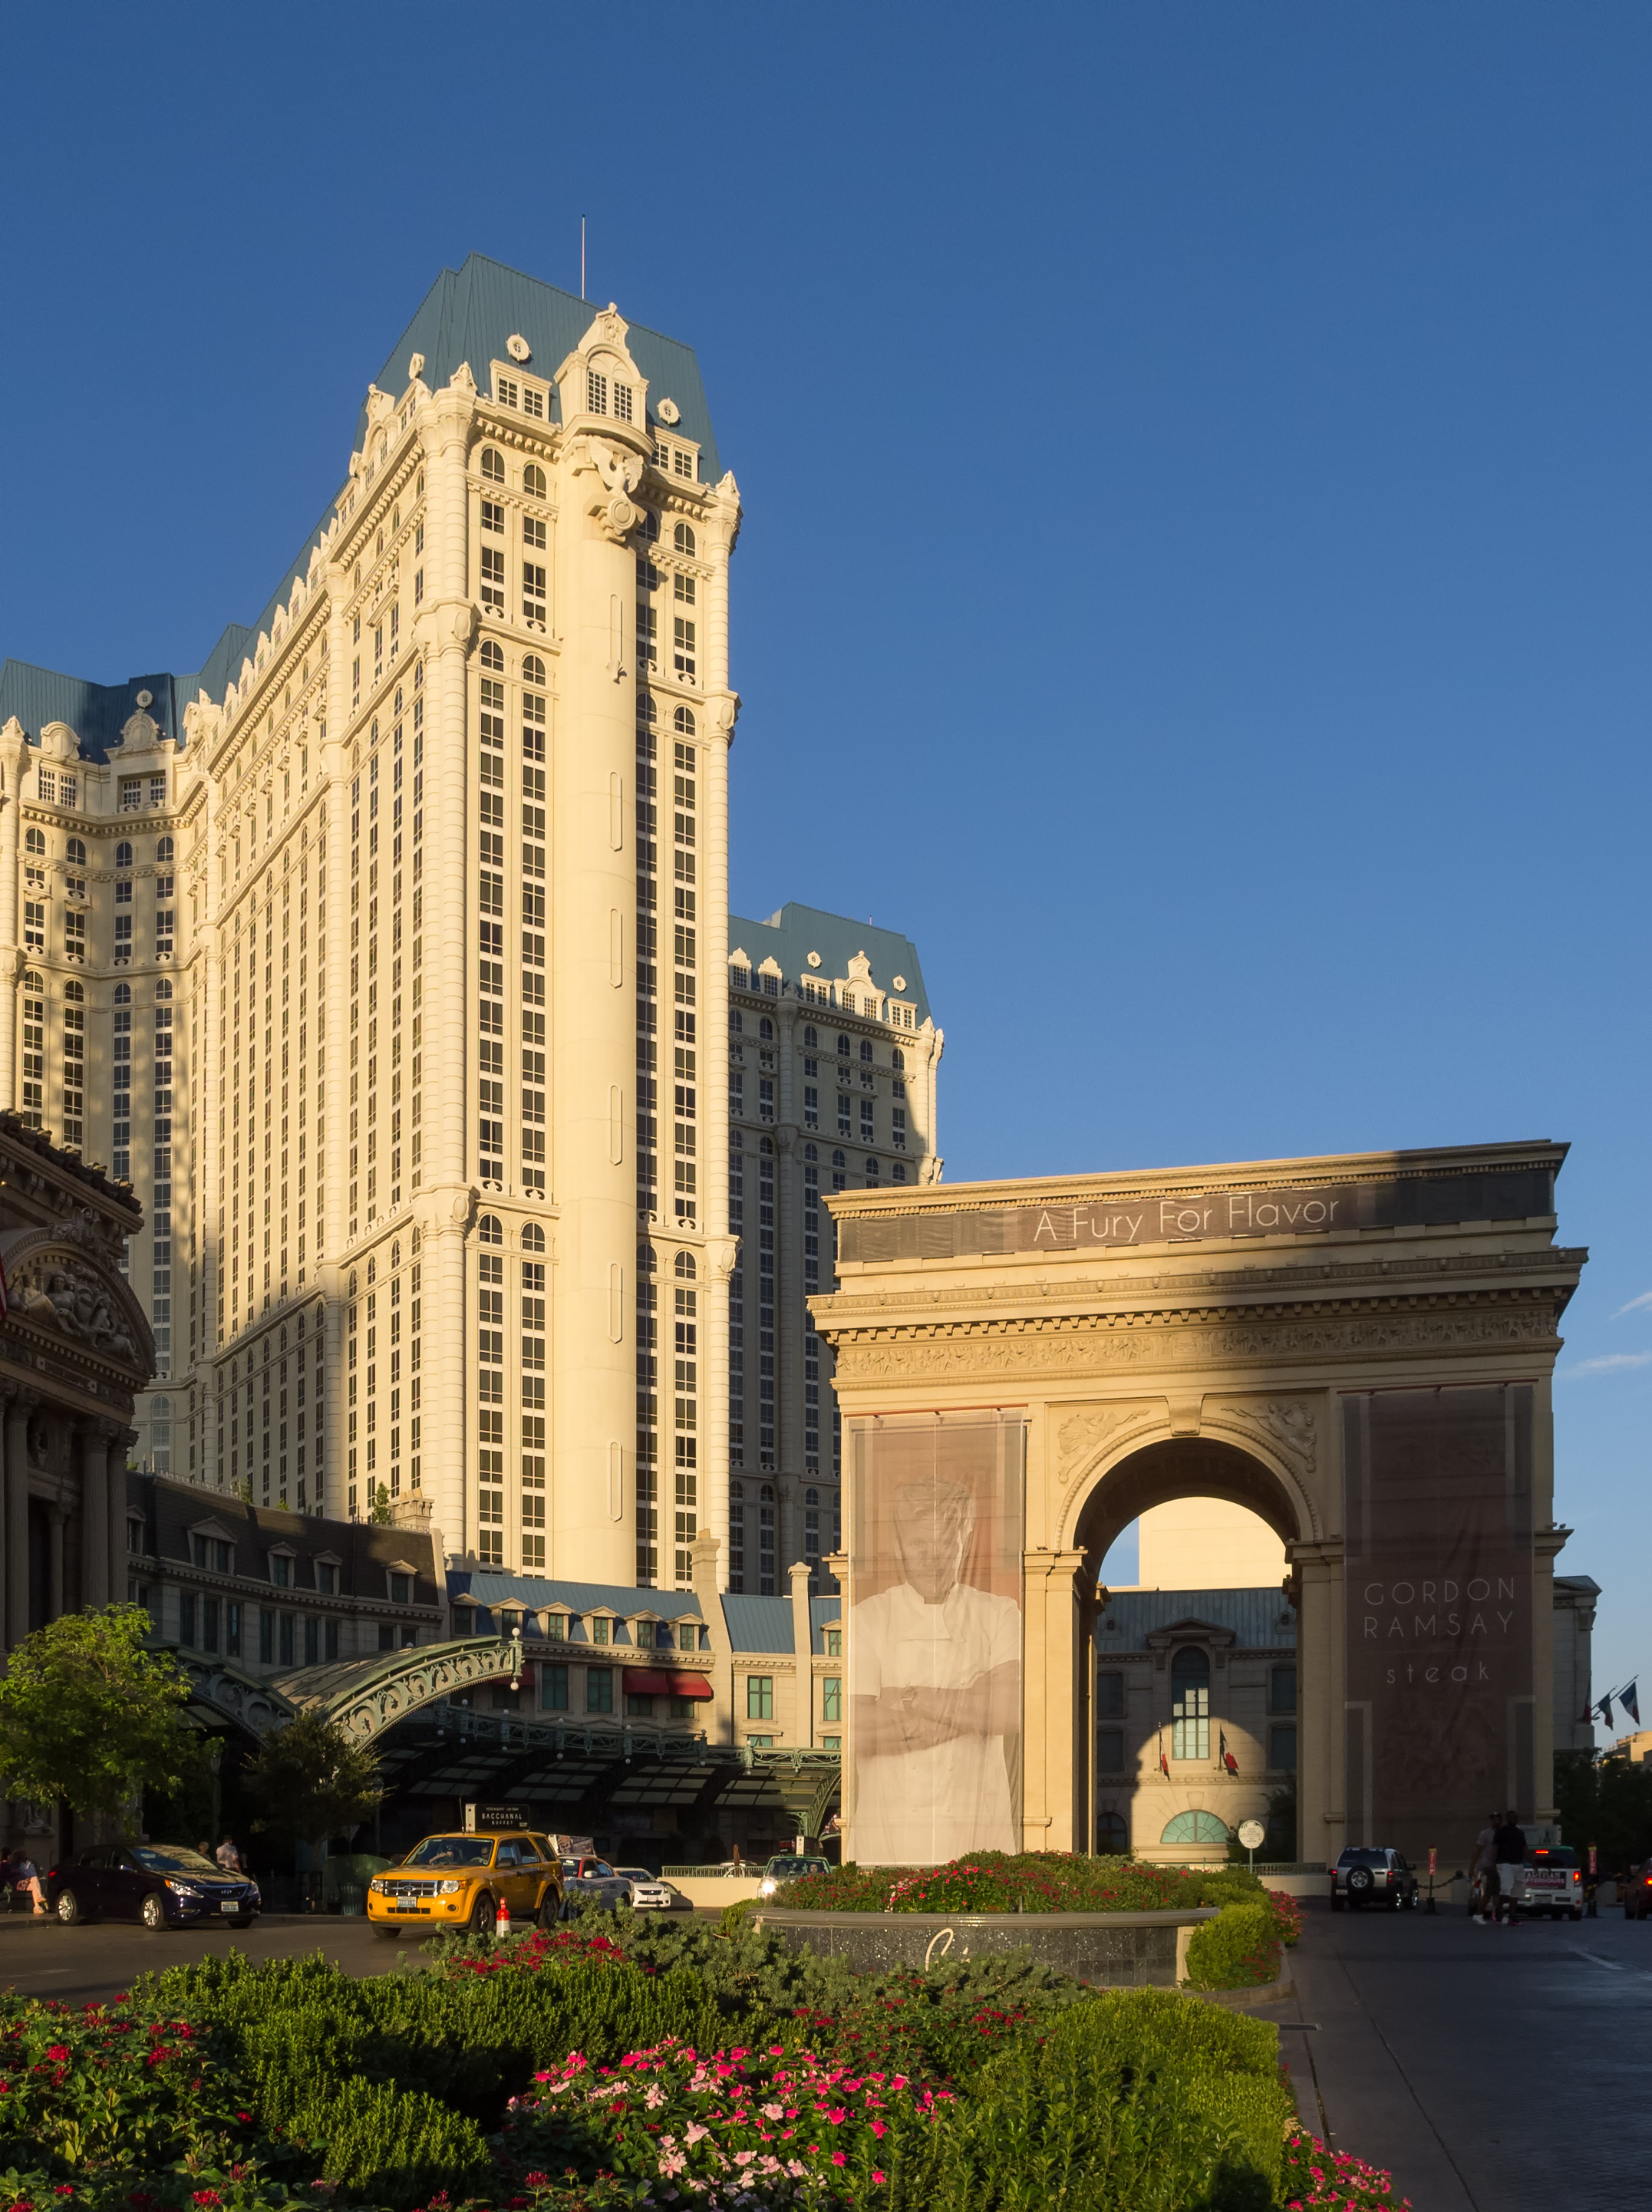 Hotel Paris with triumphal arch in Las Vegas 2013